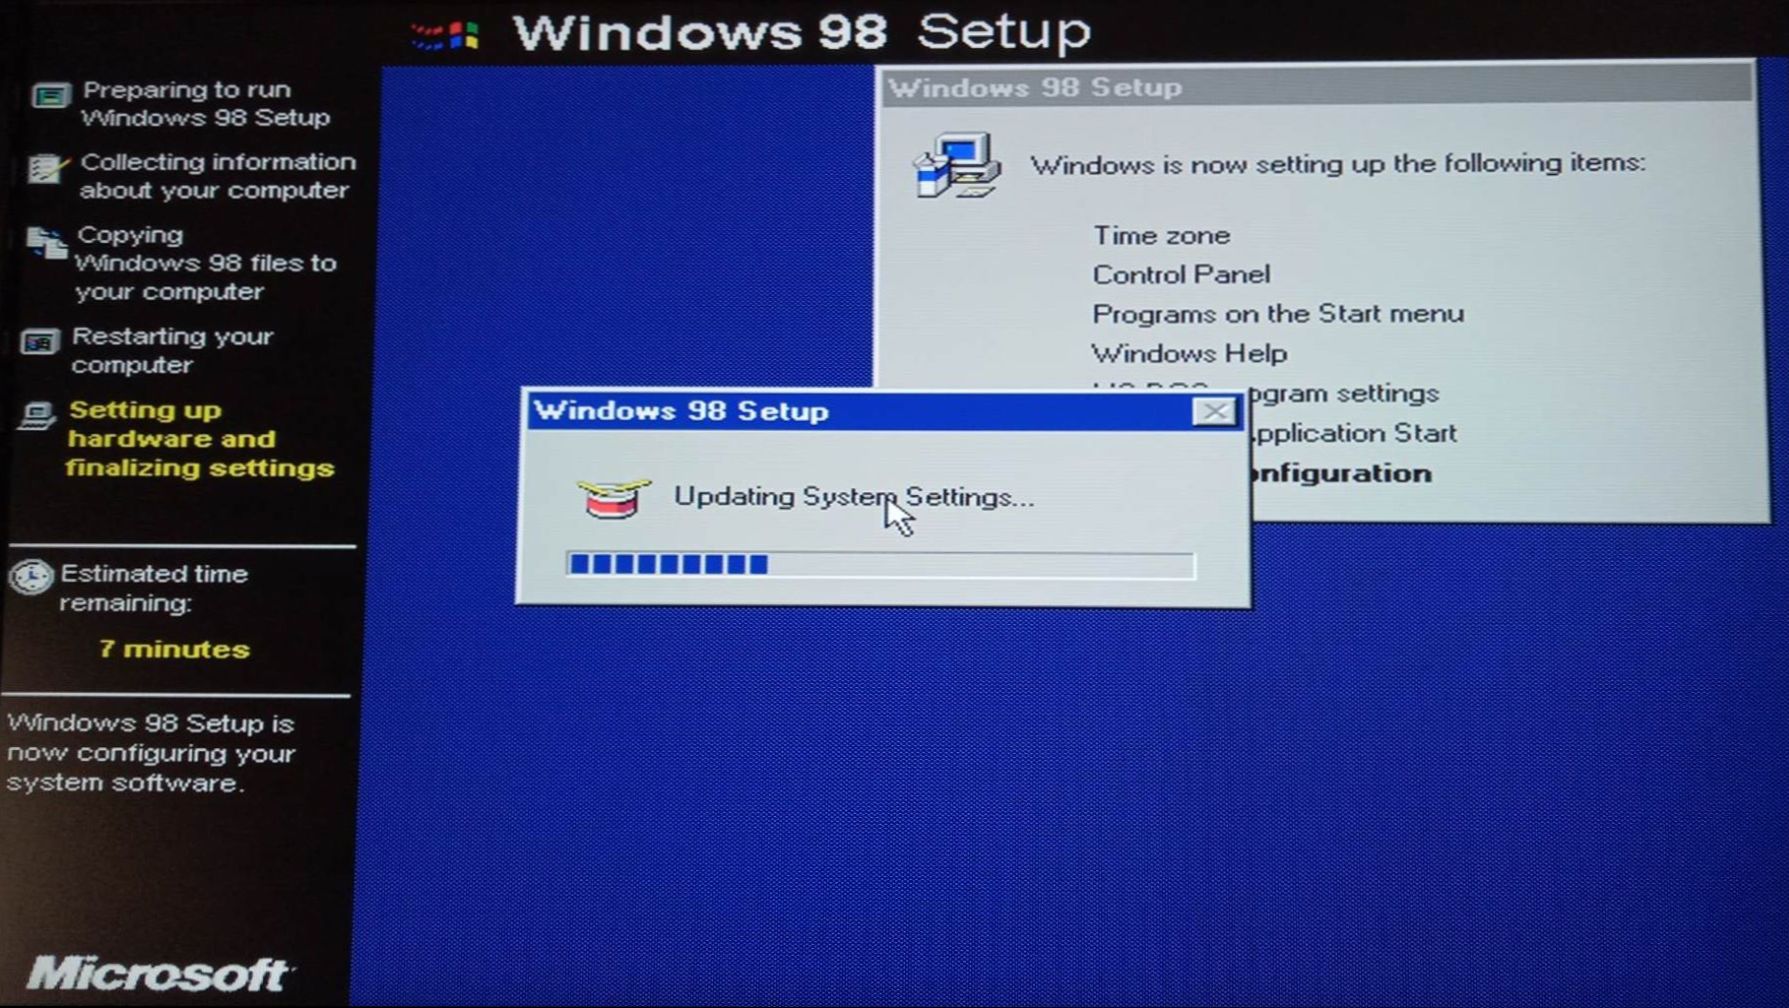 Installing Windows 98 SE